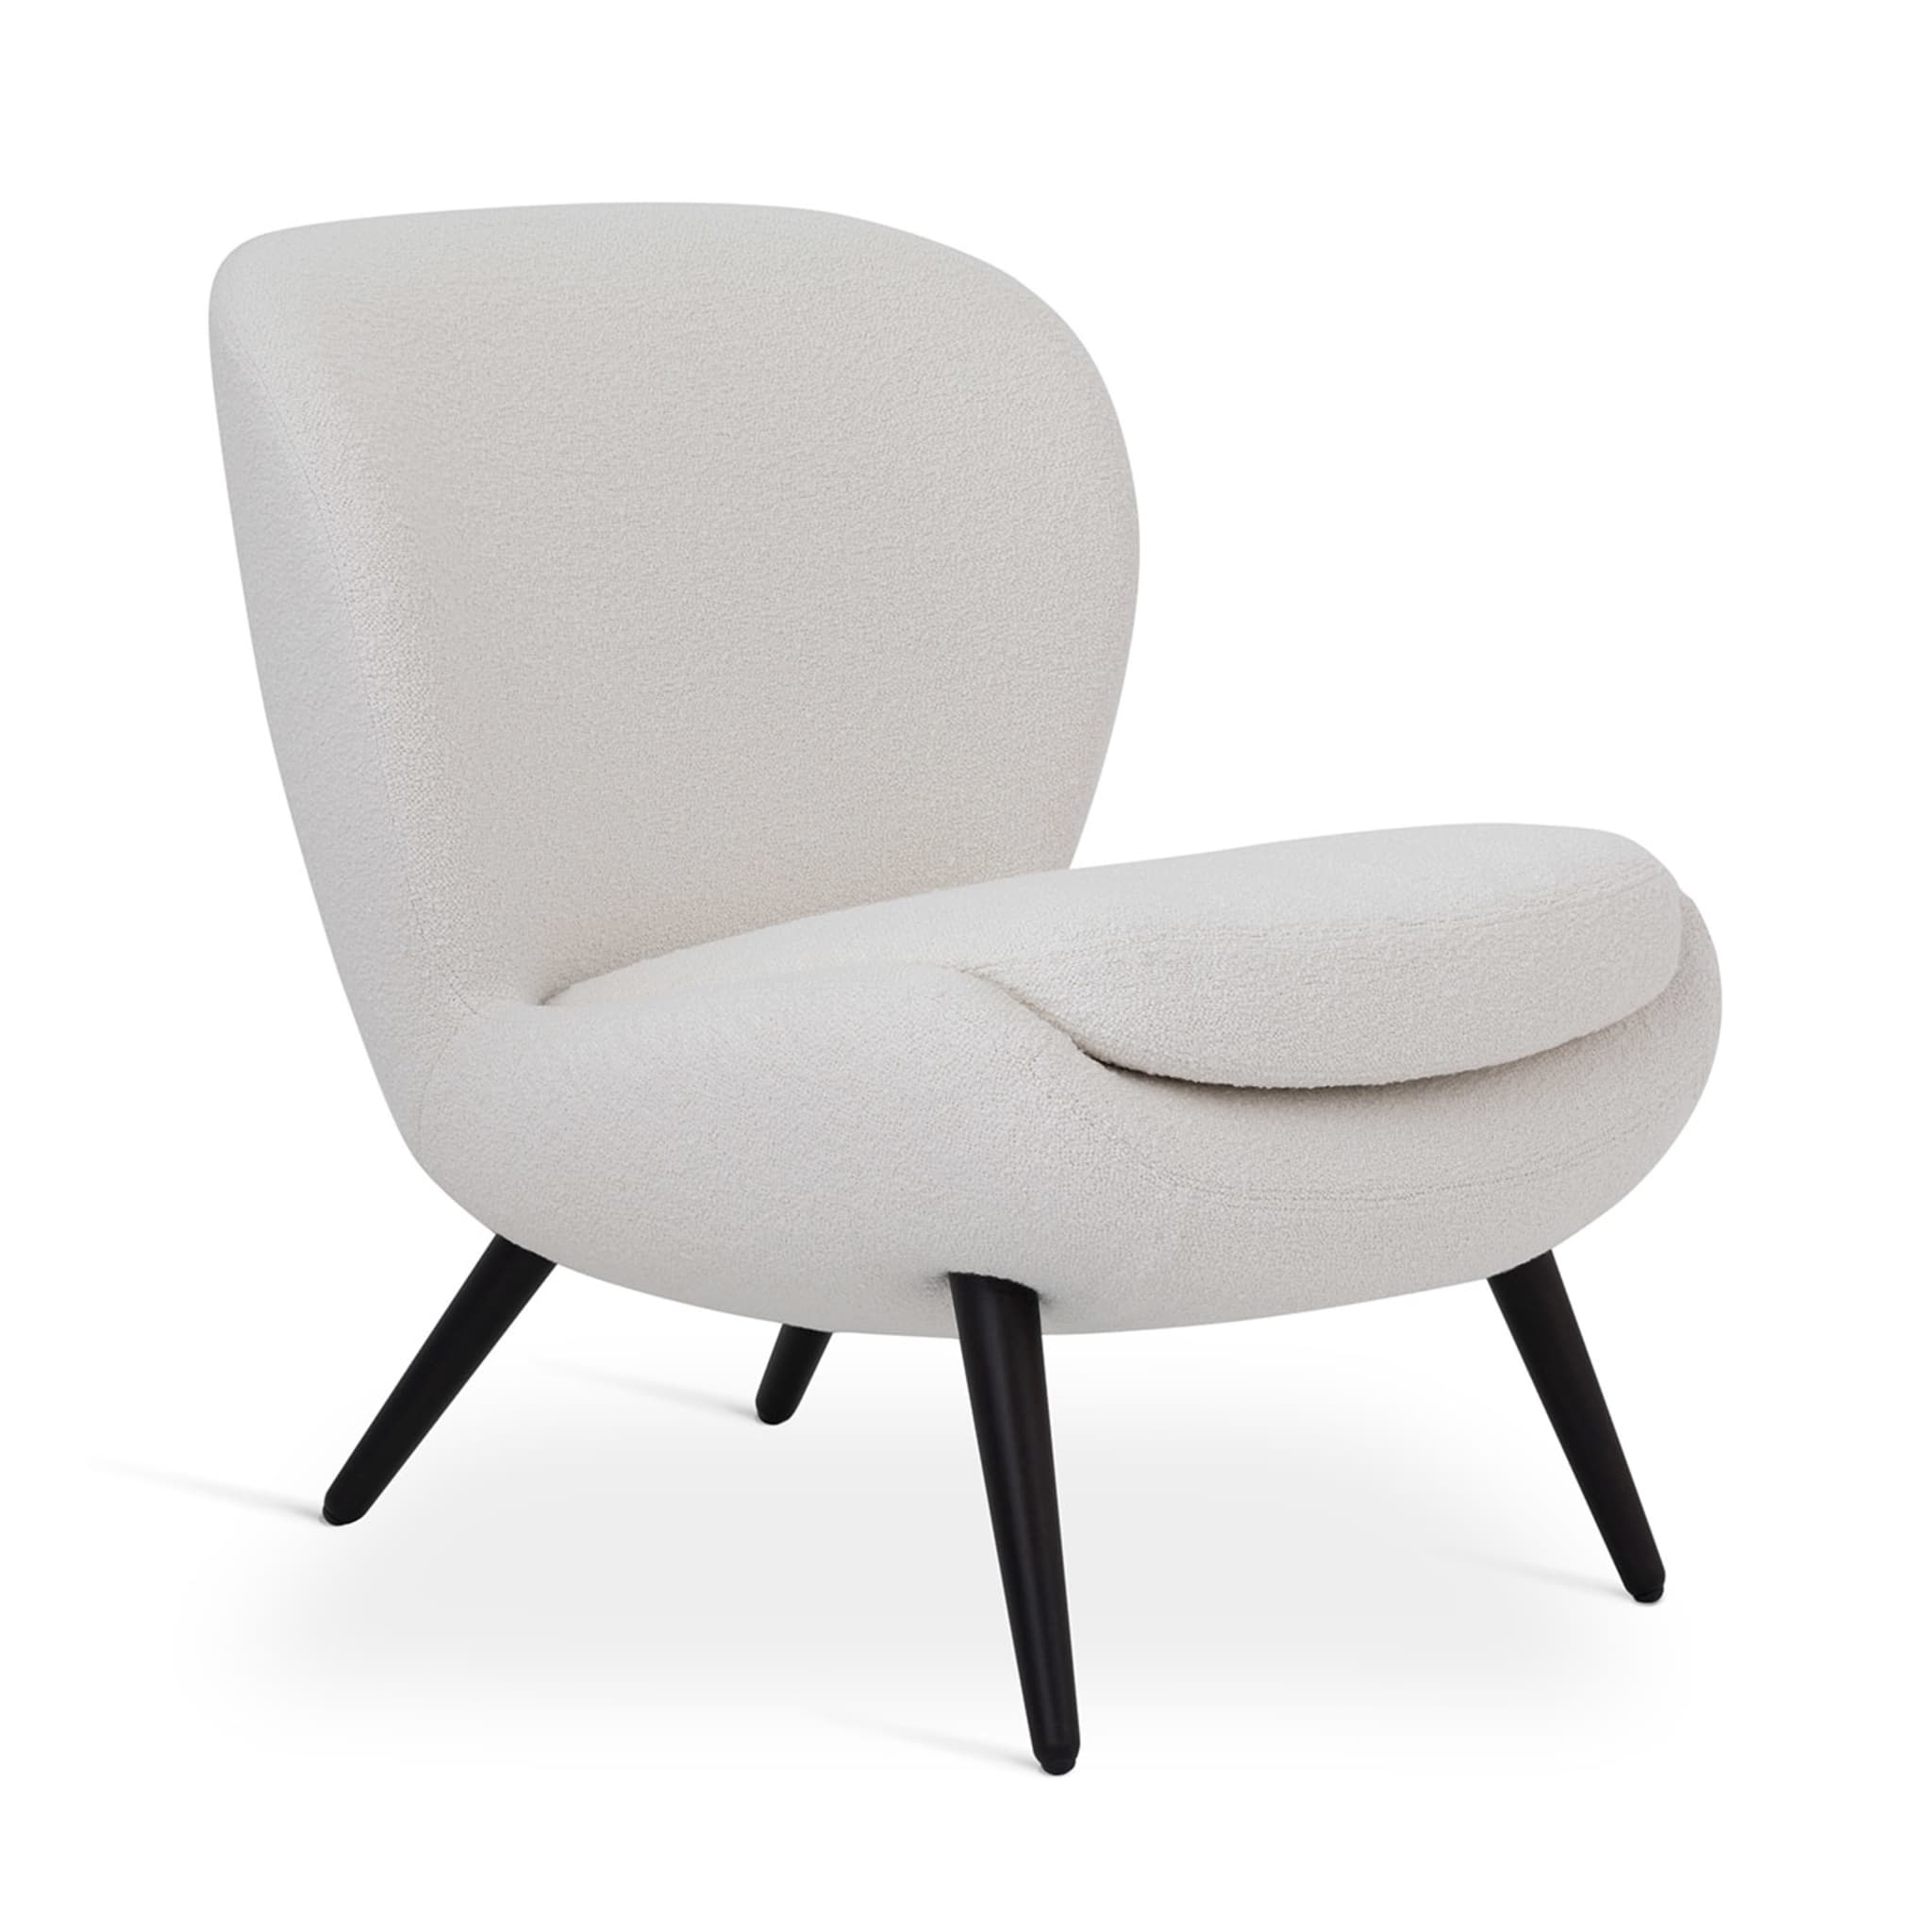 Niels White Lounge Chair - Alternative view 1